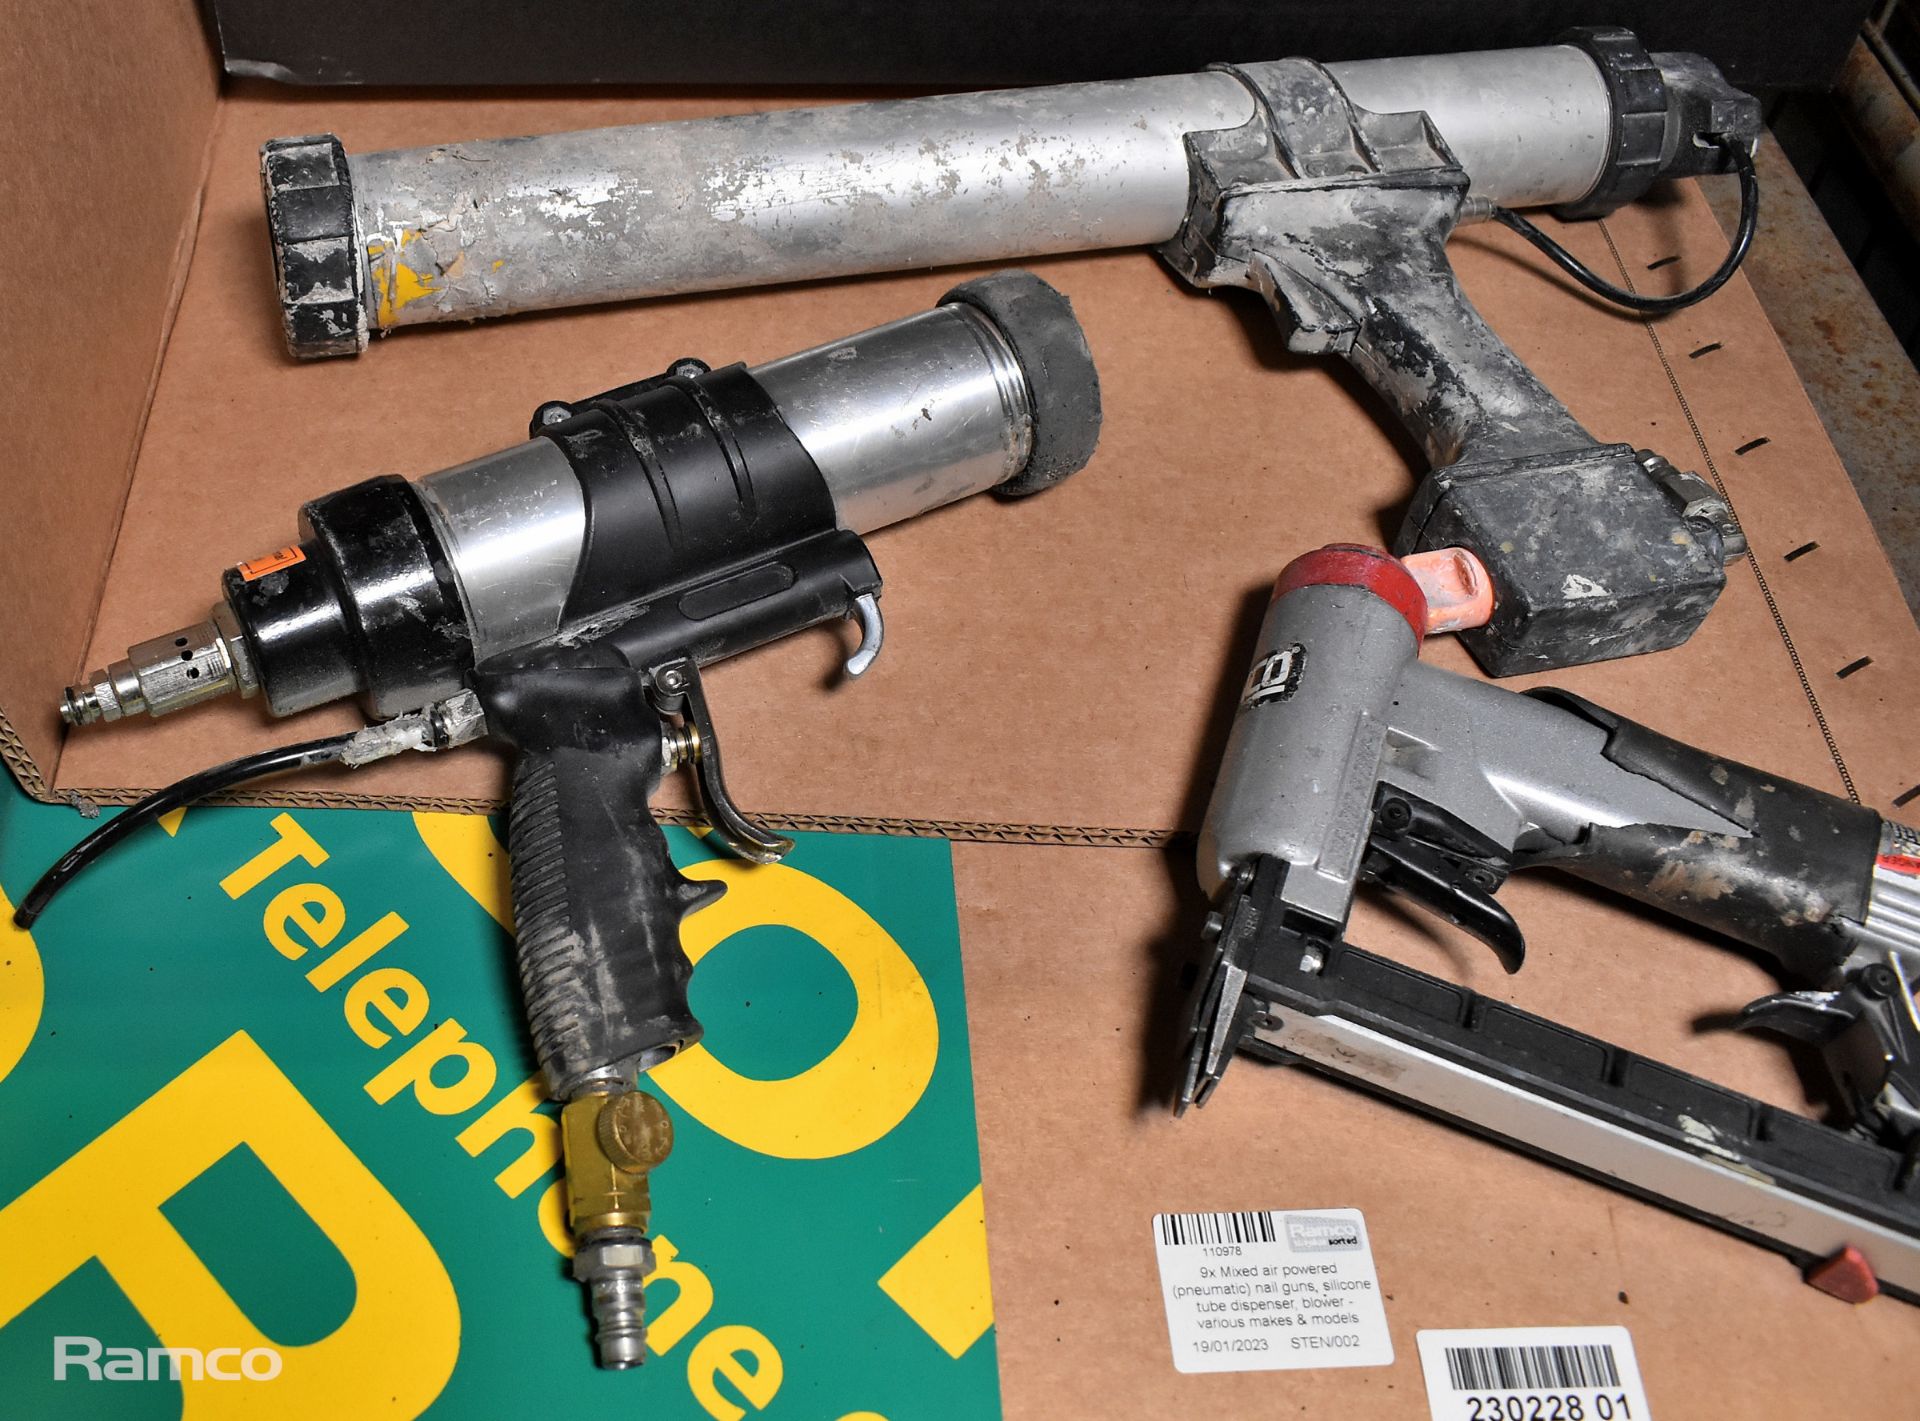 2x Air powered (pneumatic) nail guns, 4x silicone tube dispenser, Paint srayer - Image 3 of 6